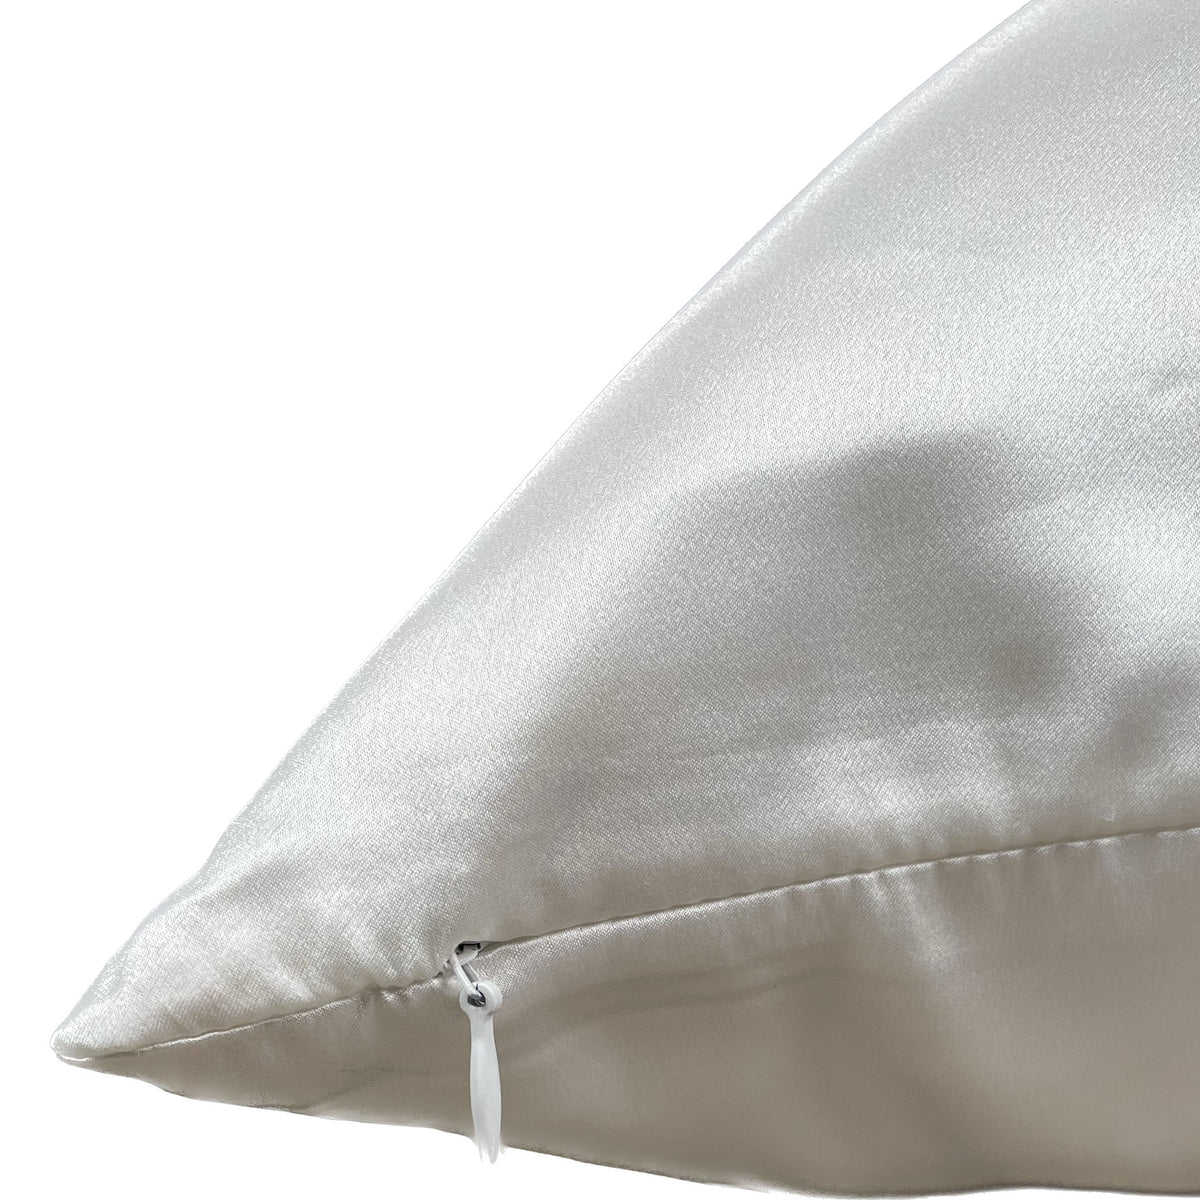 Zipper closure for a Tropical Palms Silk Pillowcase from Mulberry Park Silks